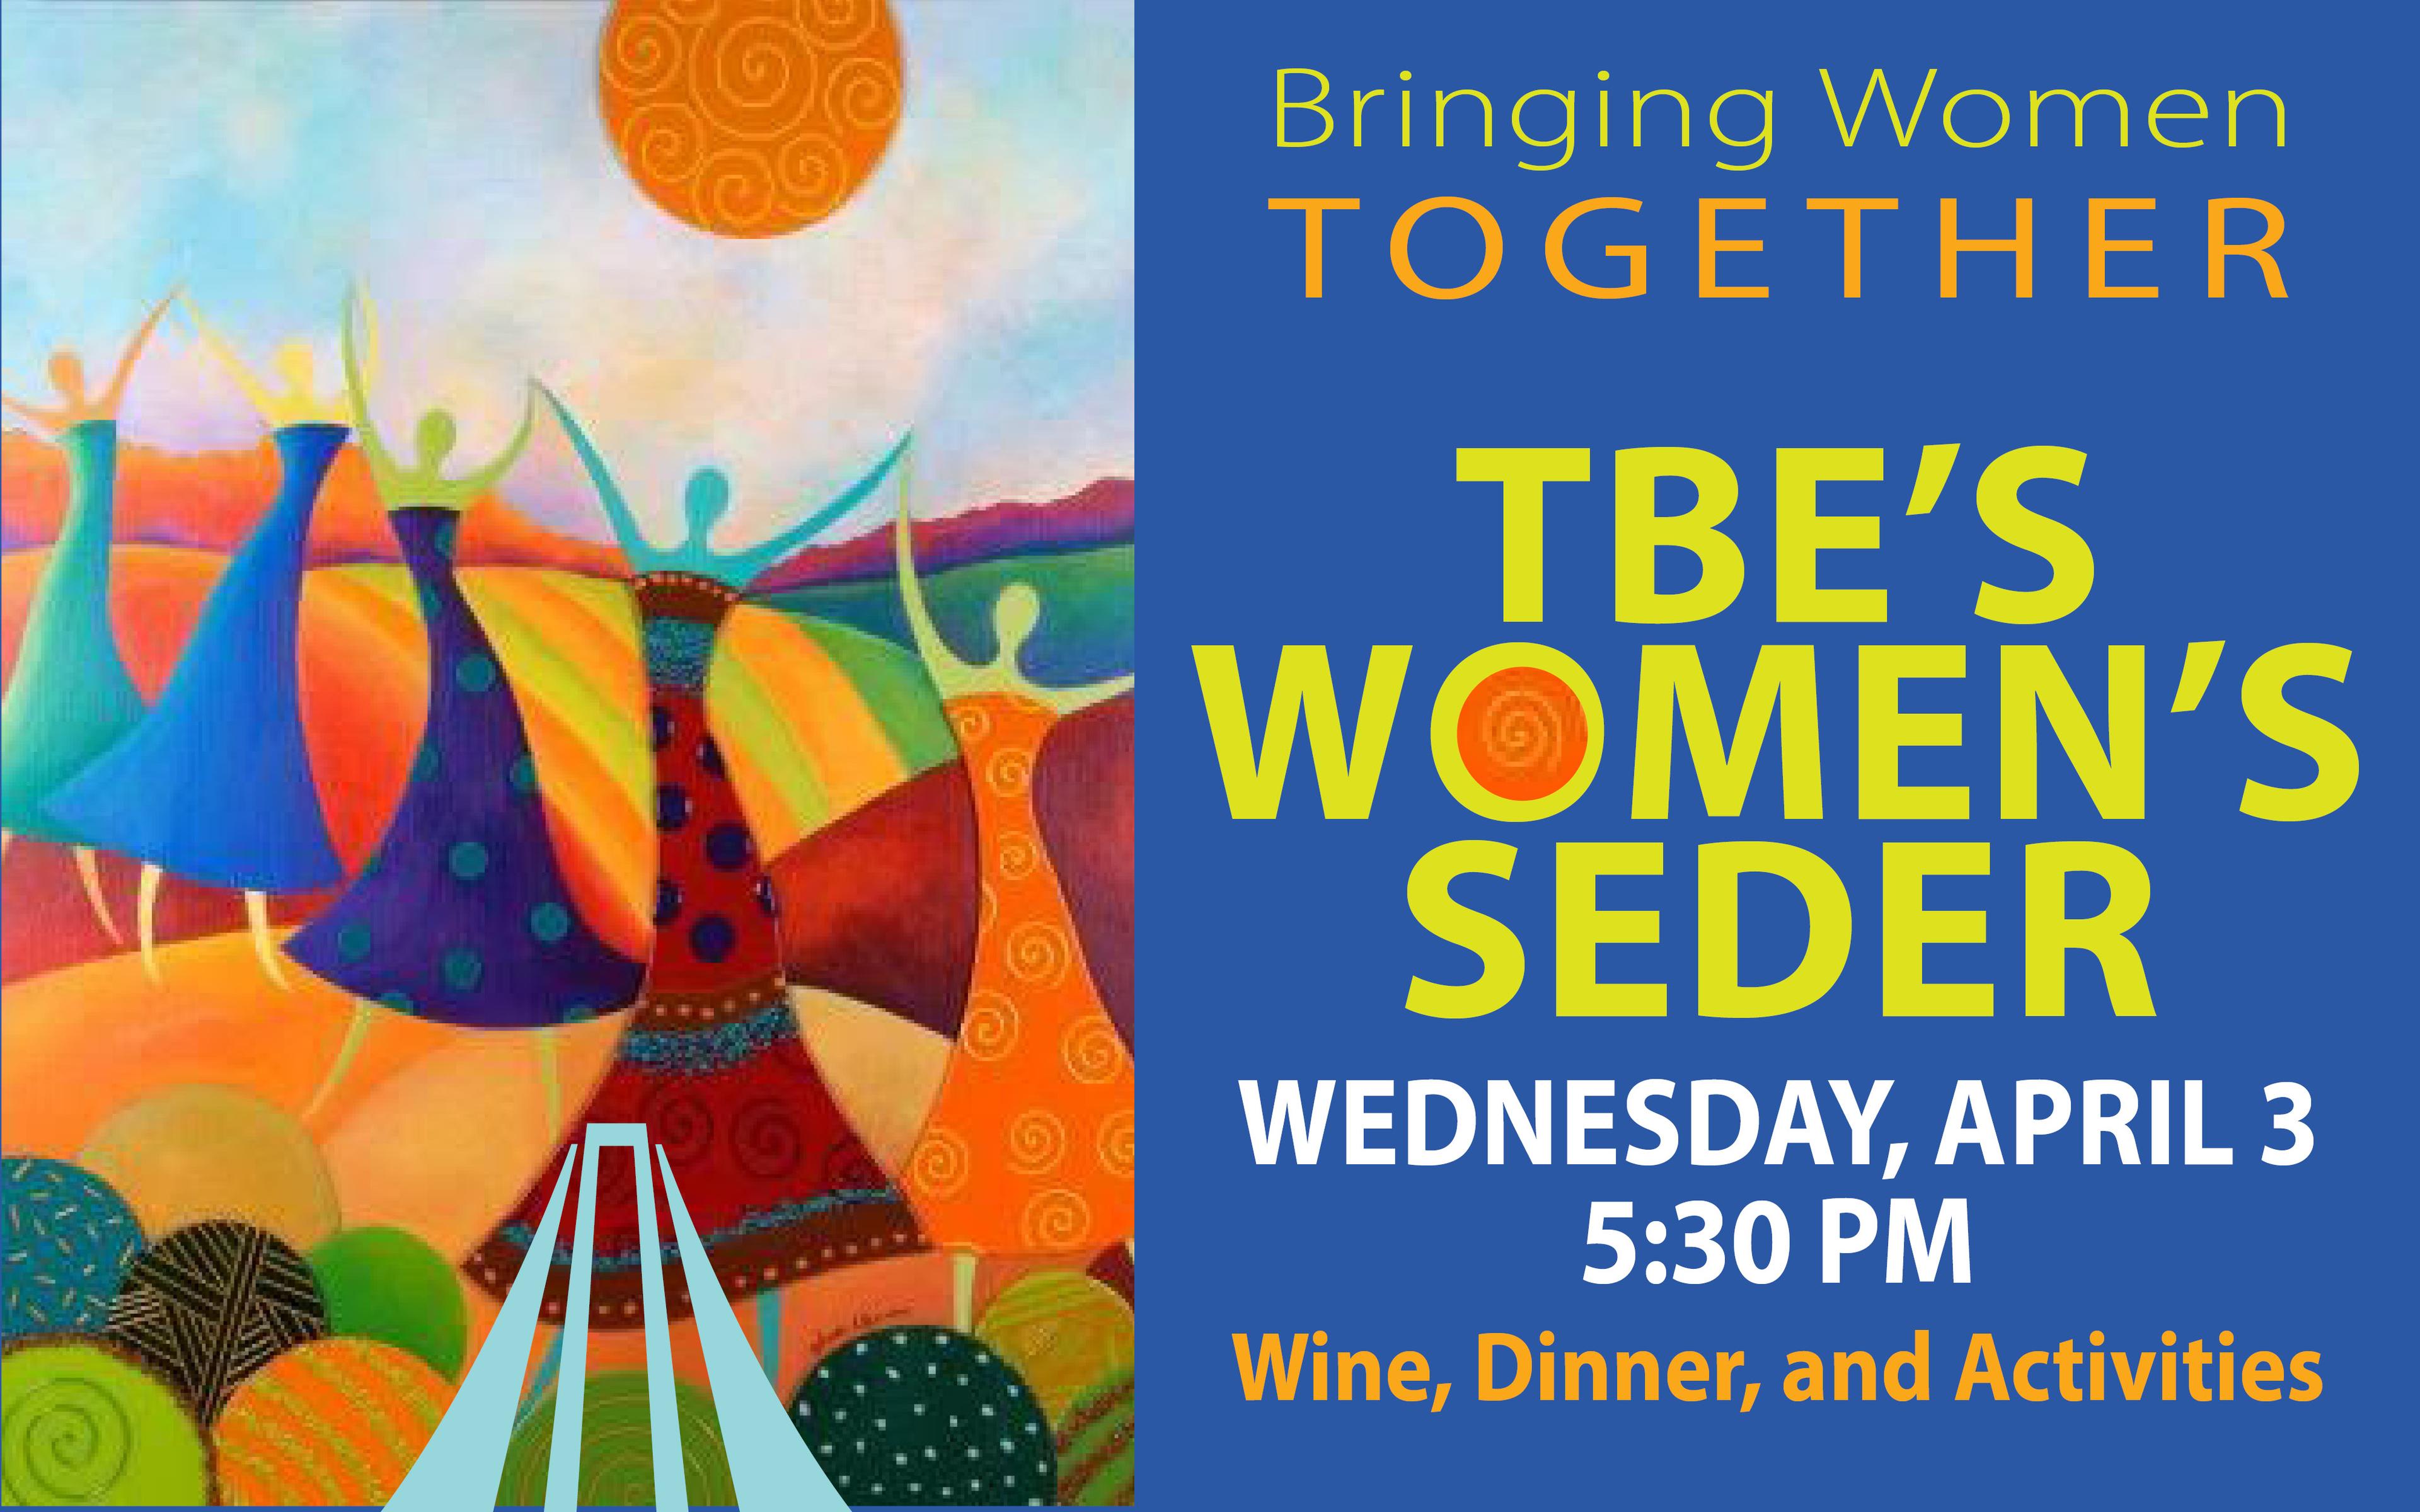 TBE'S Annual Women's Seder